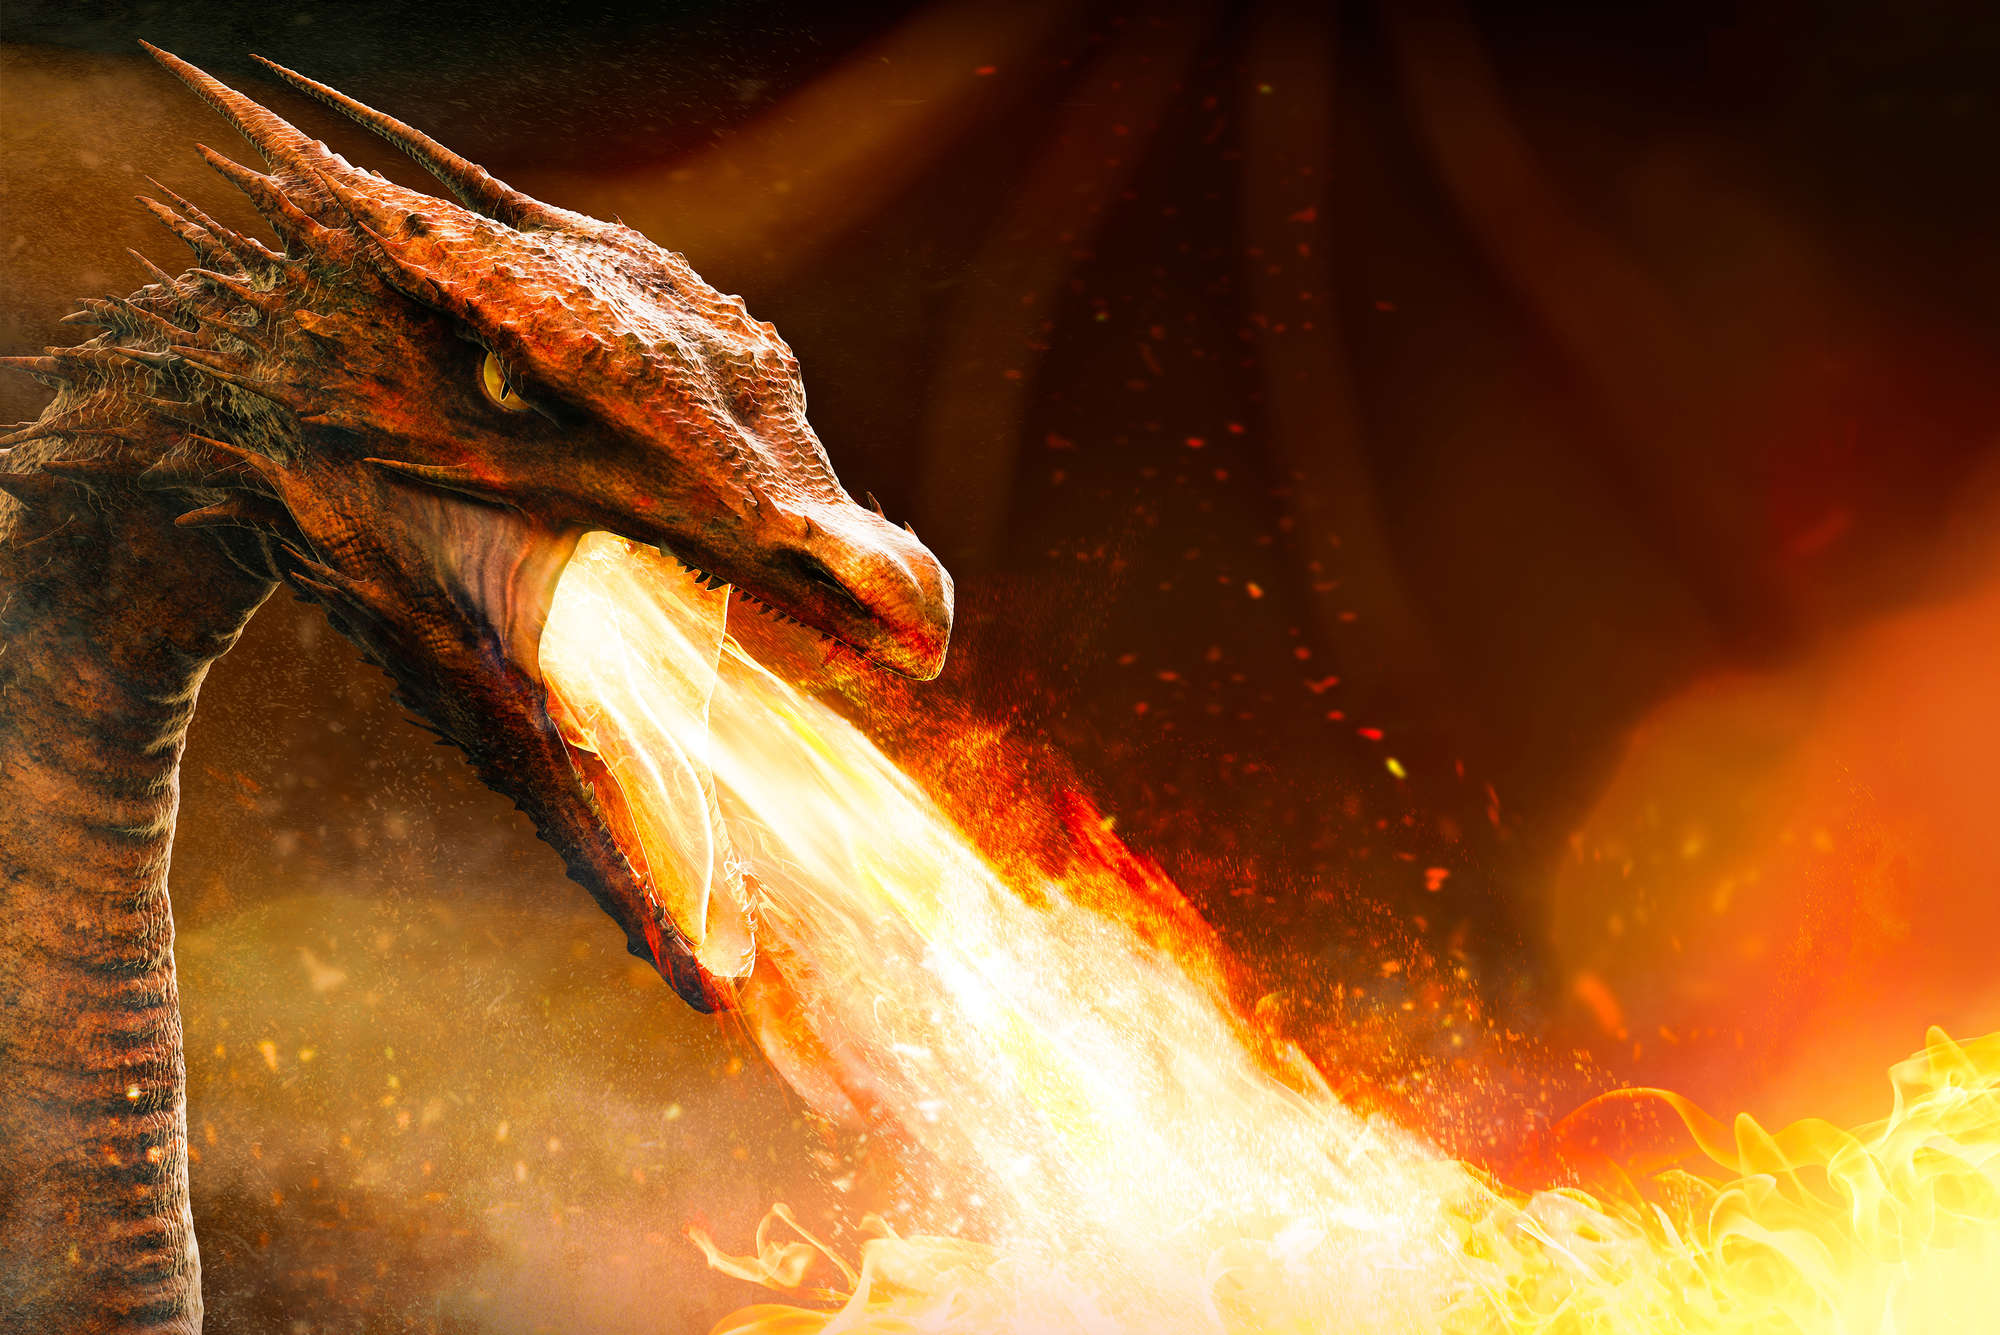             Papel pintado de fantasía Dragón que respira fuego sobre vellón liso de primera calidad
        